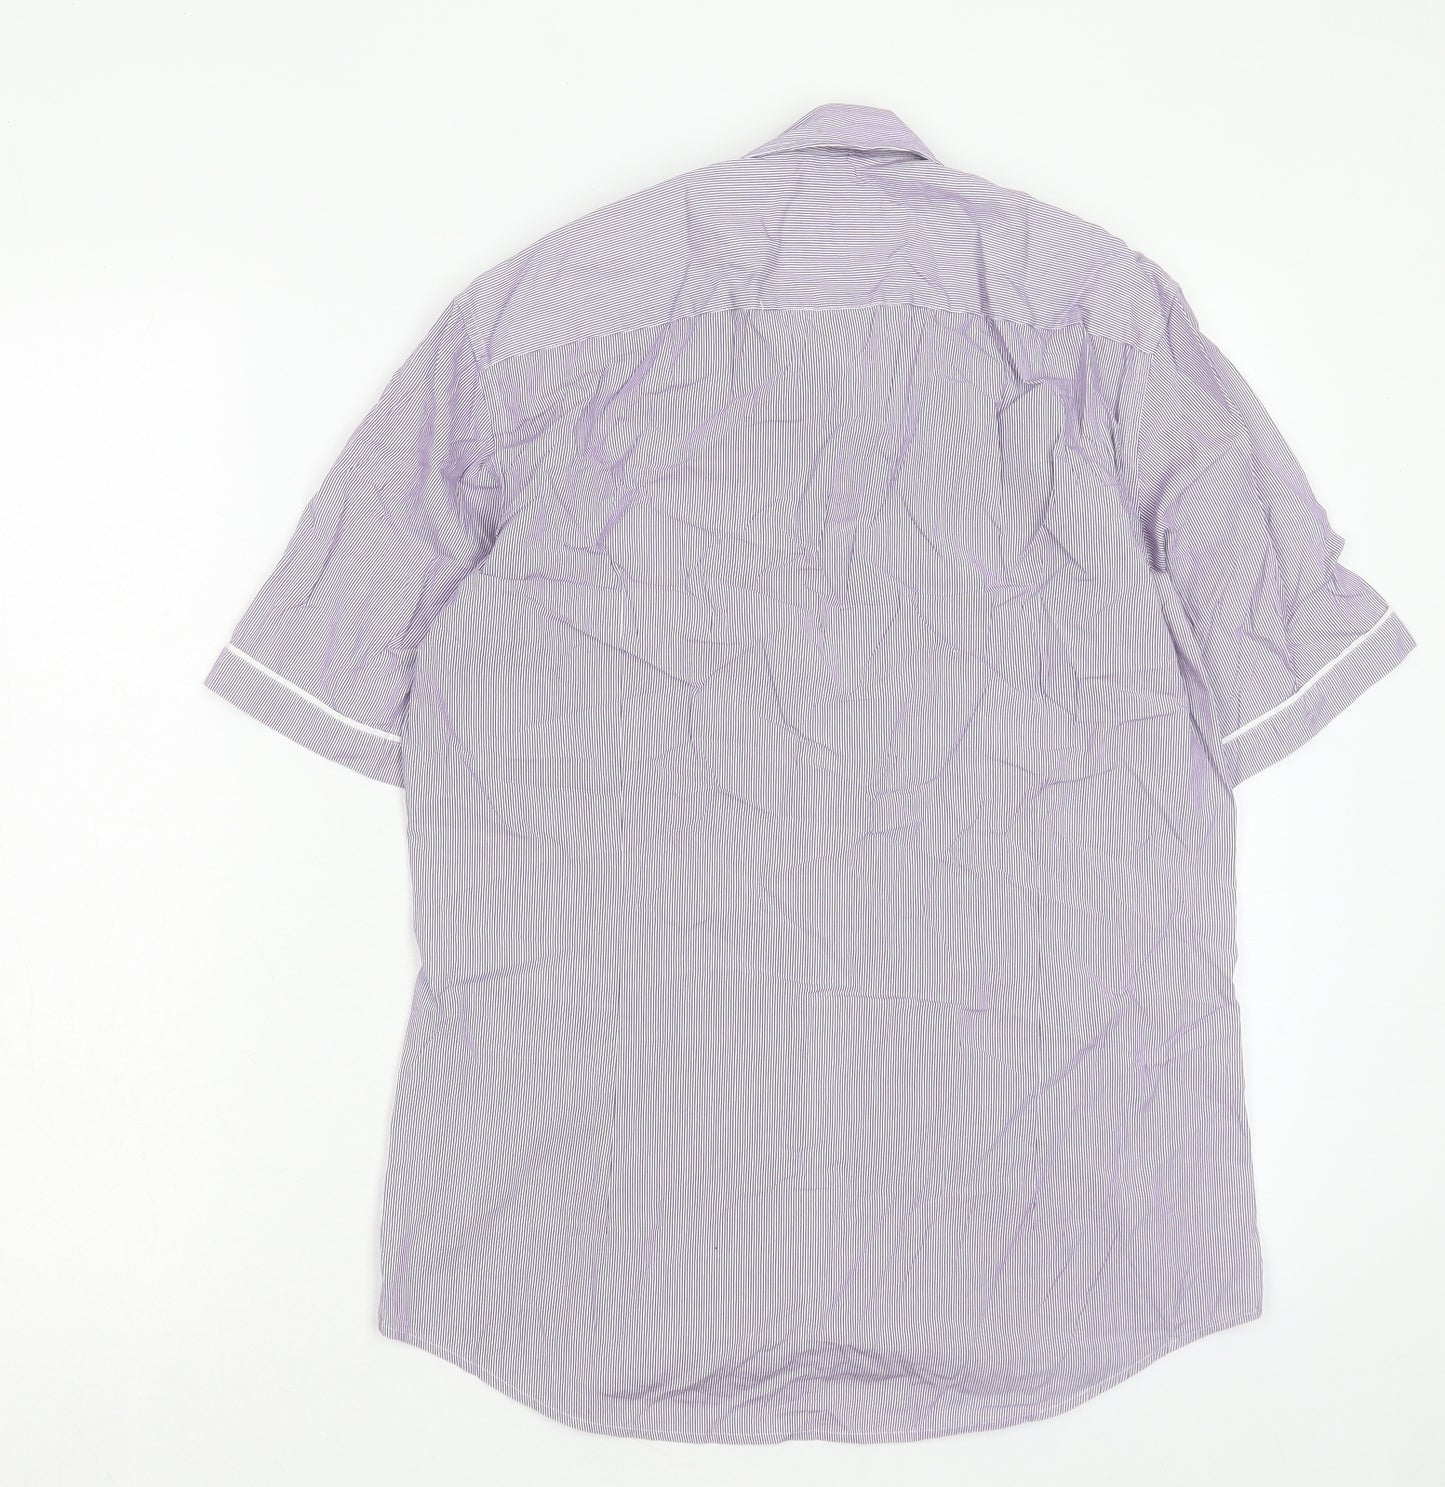 HUGO BOSS Mens Purple Striped Cotton Dress Shirt Size S Collared Button - Pocket Detail